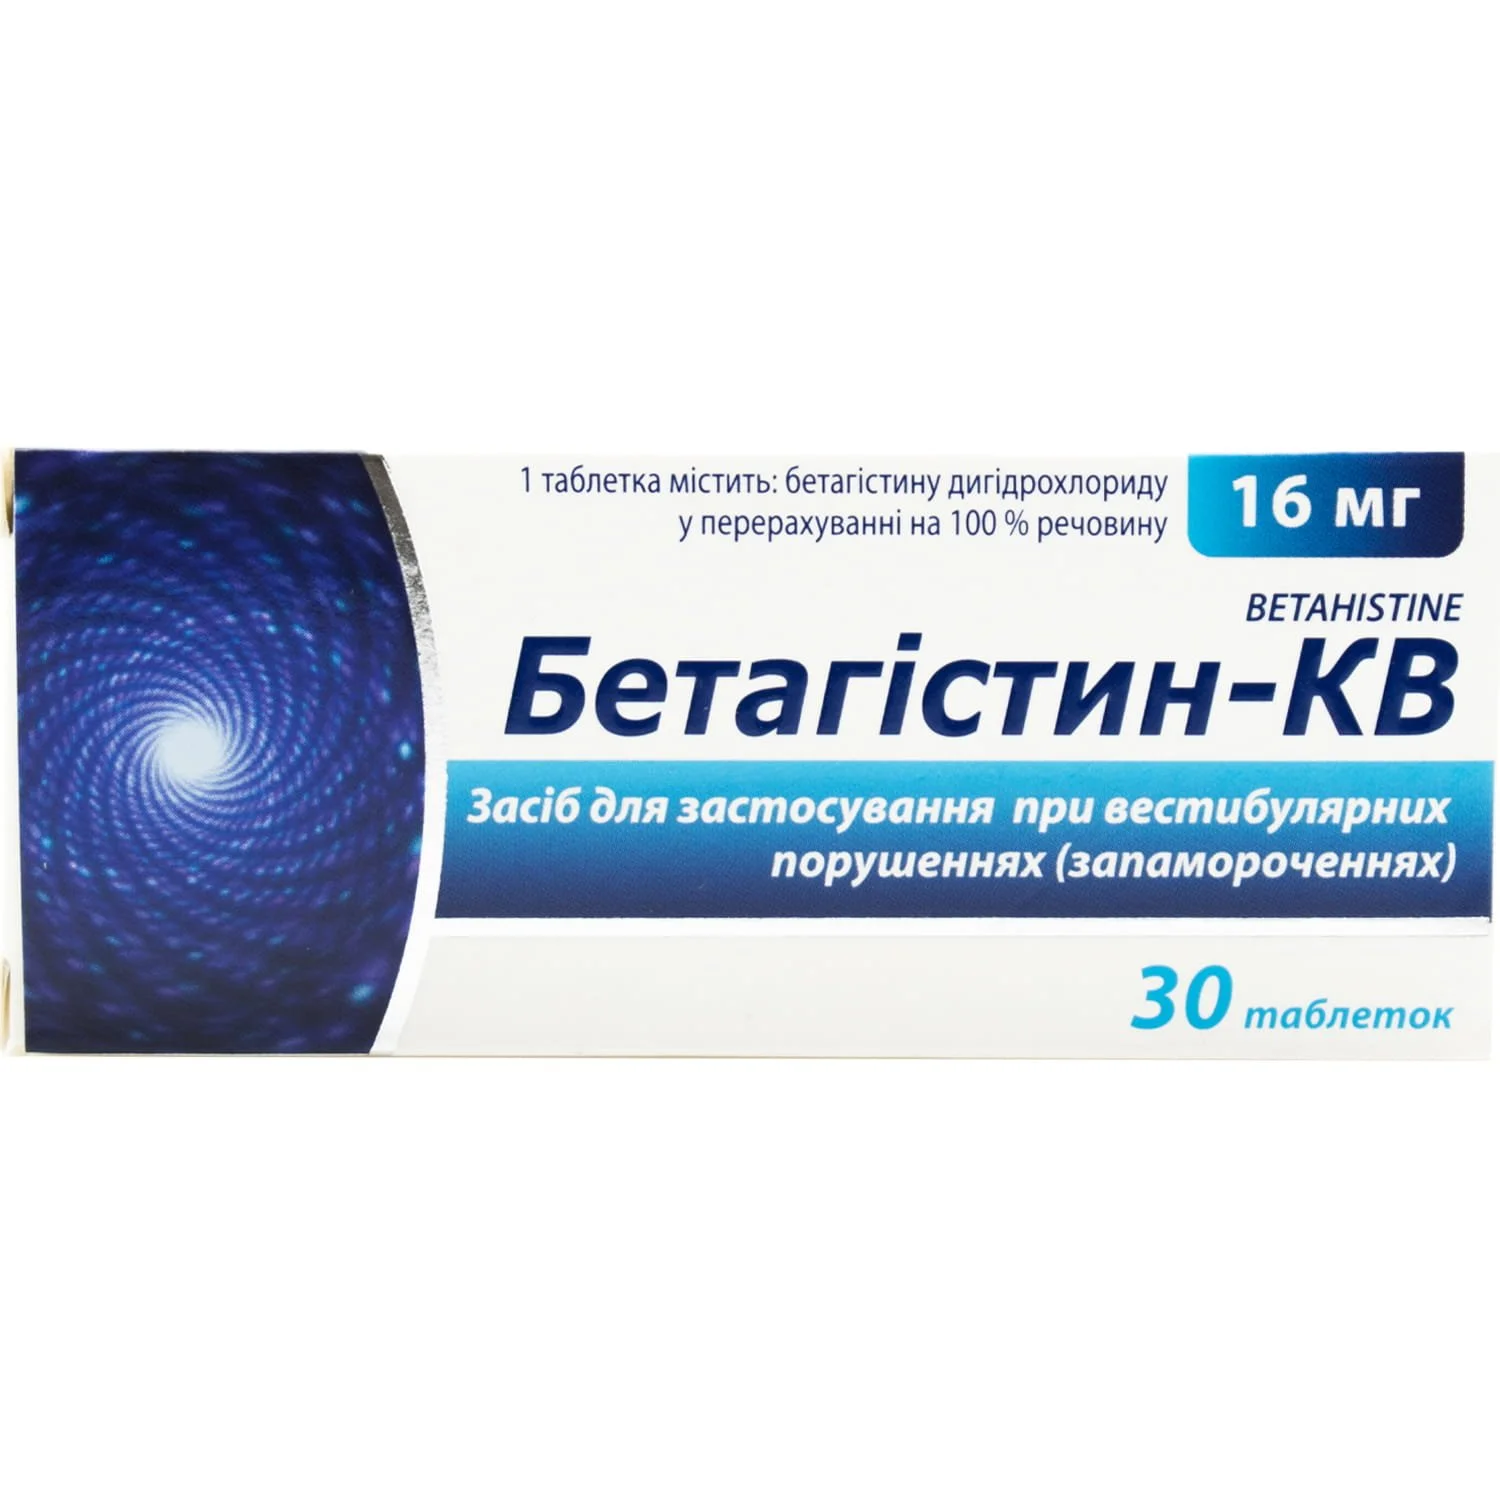 Бетагистин таблетки 16мг. Бетагистин 16 мг. Таблетки Бетагистин, 16 миллиграмм.. Бетагис форма выпуска.